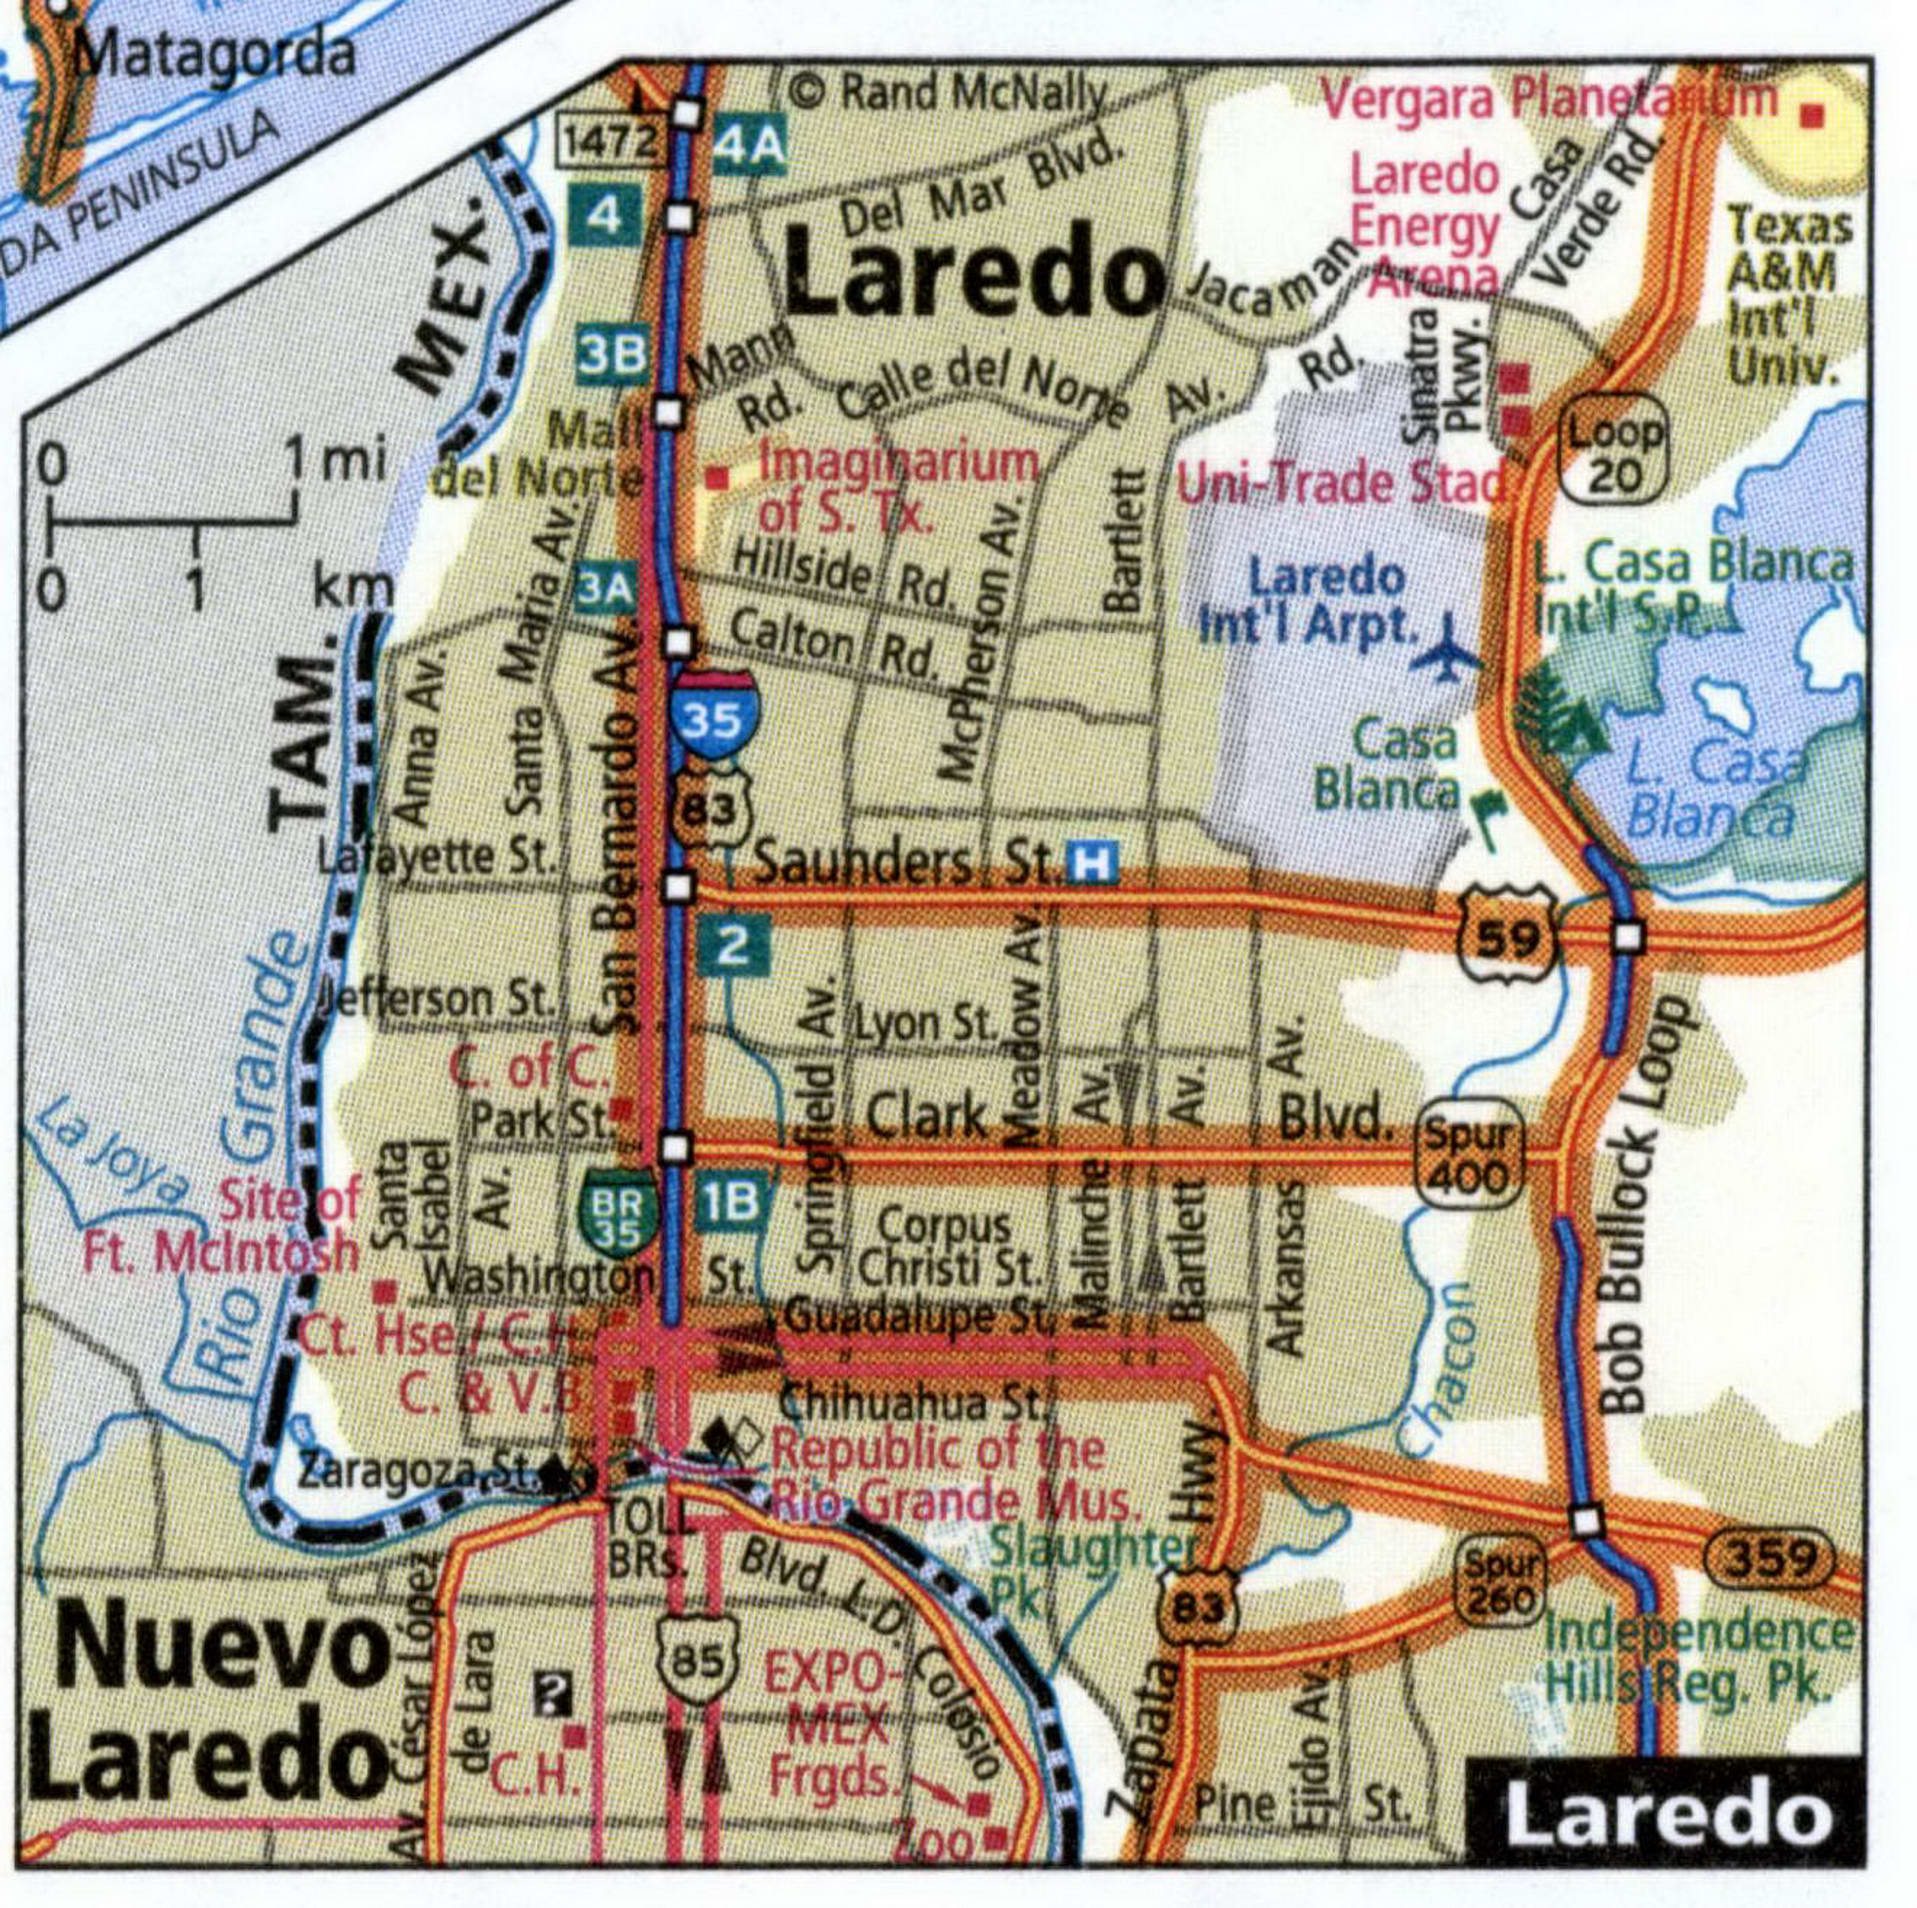 Laredo city map for truckers